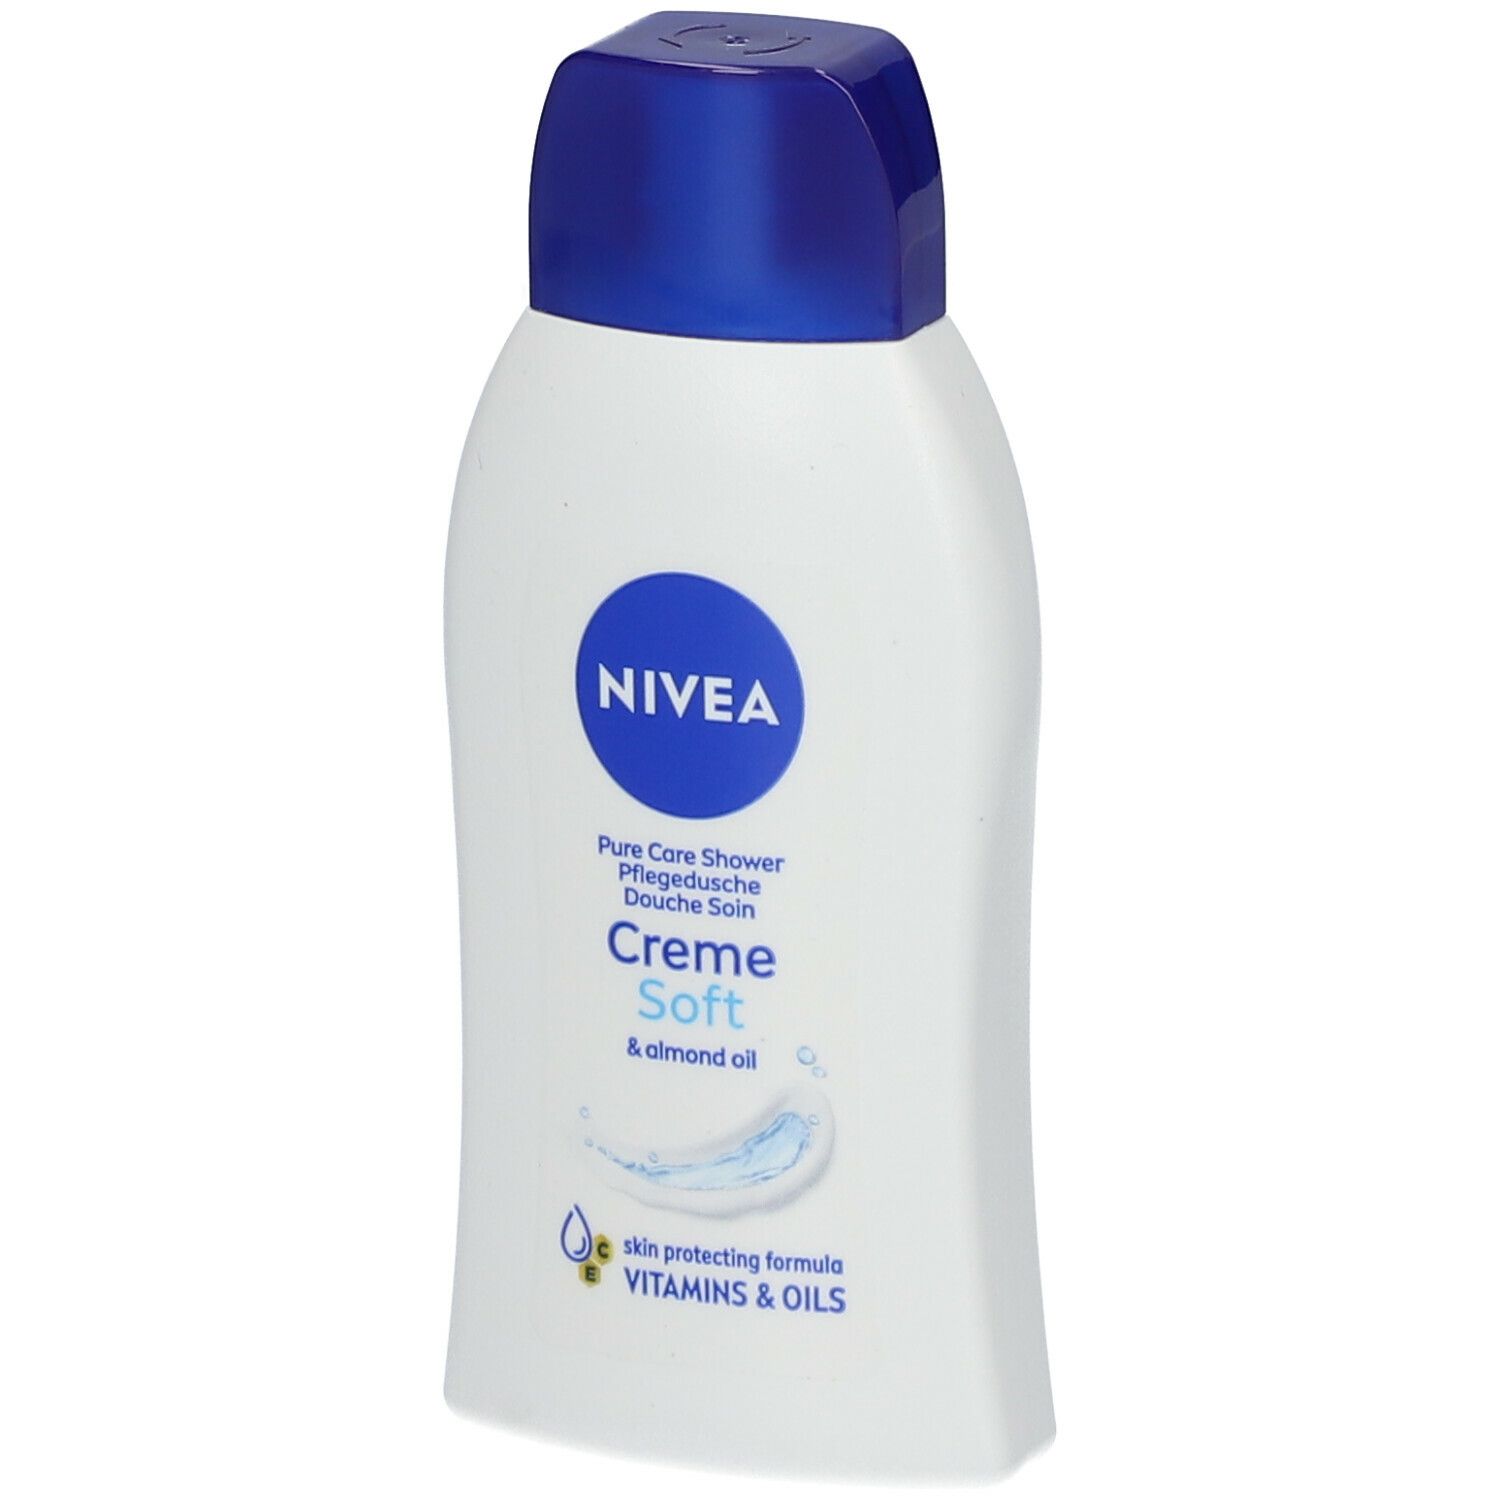 NIVEA® creme soft Cremedusche